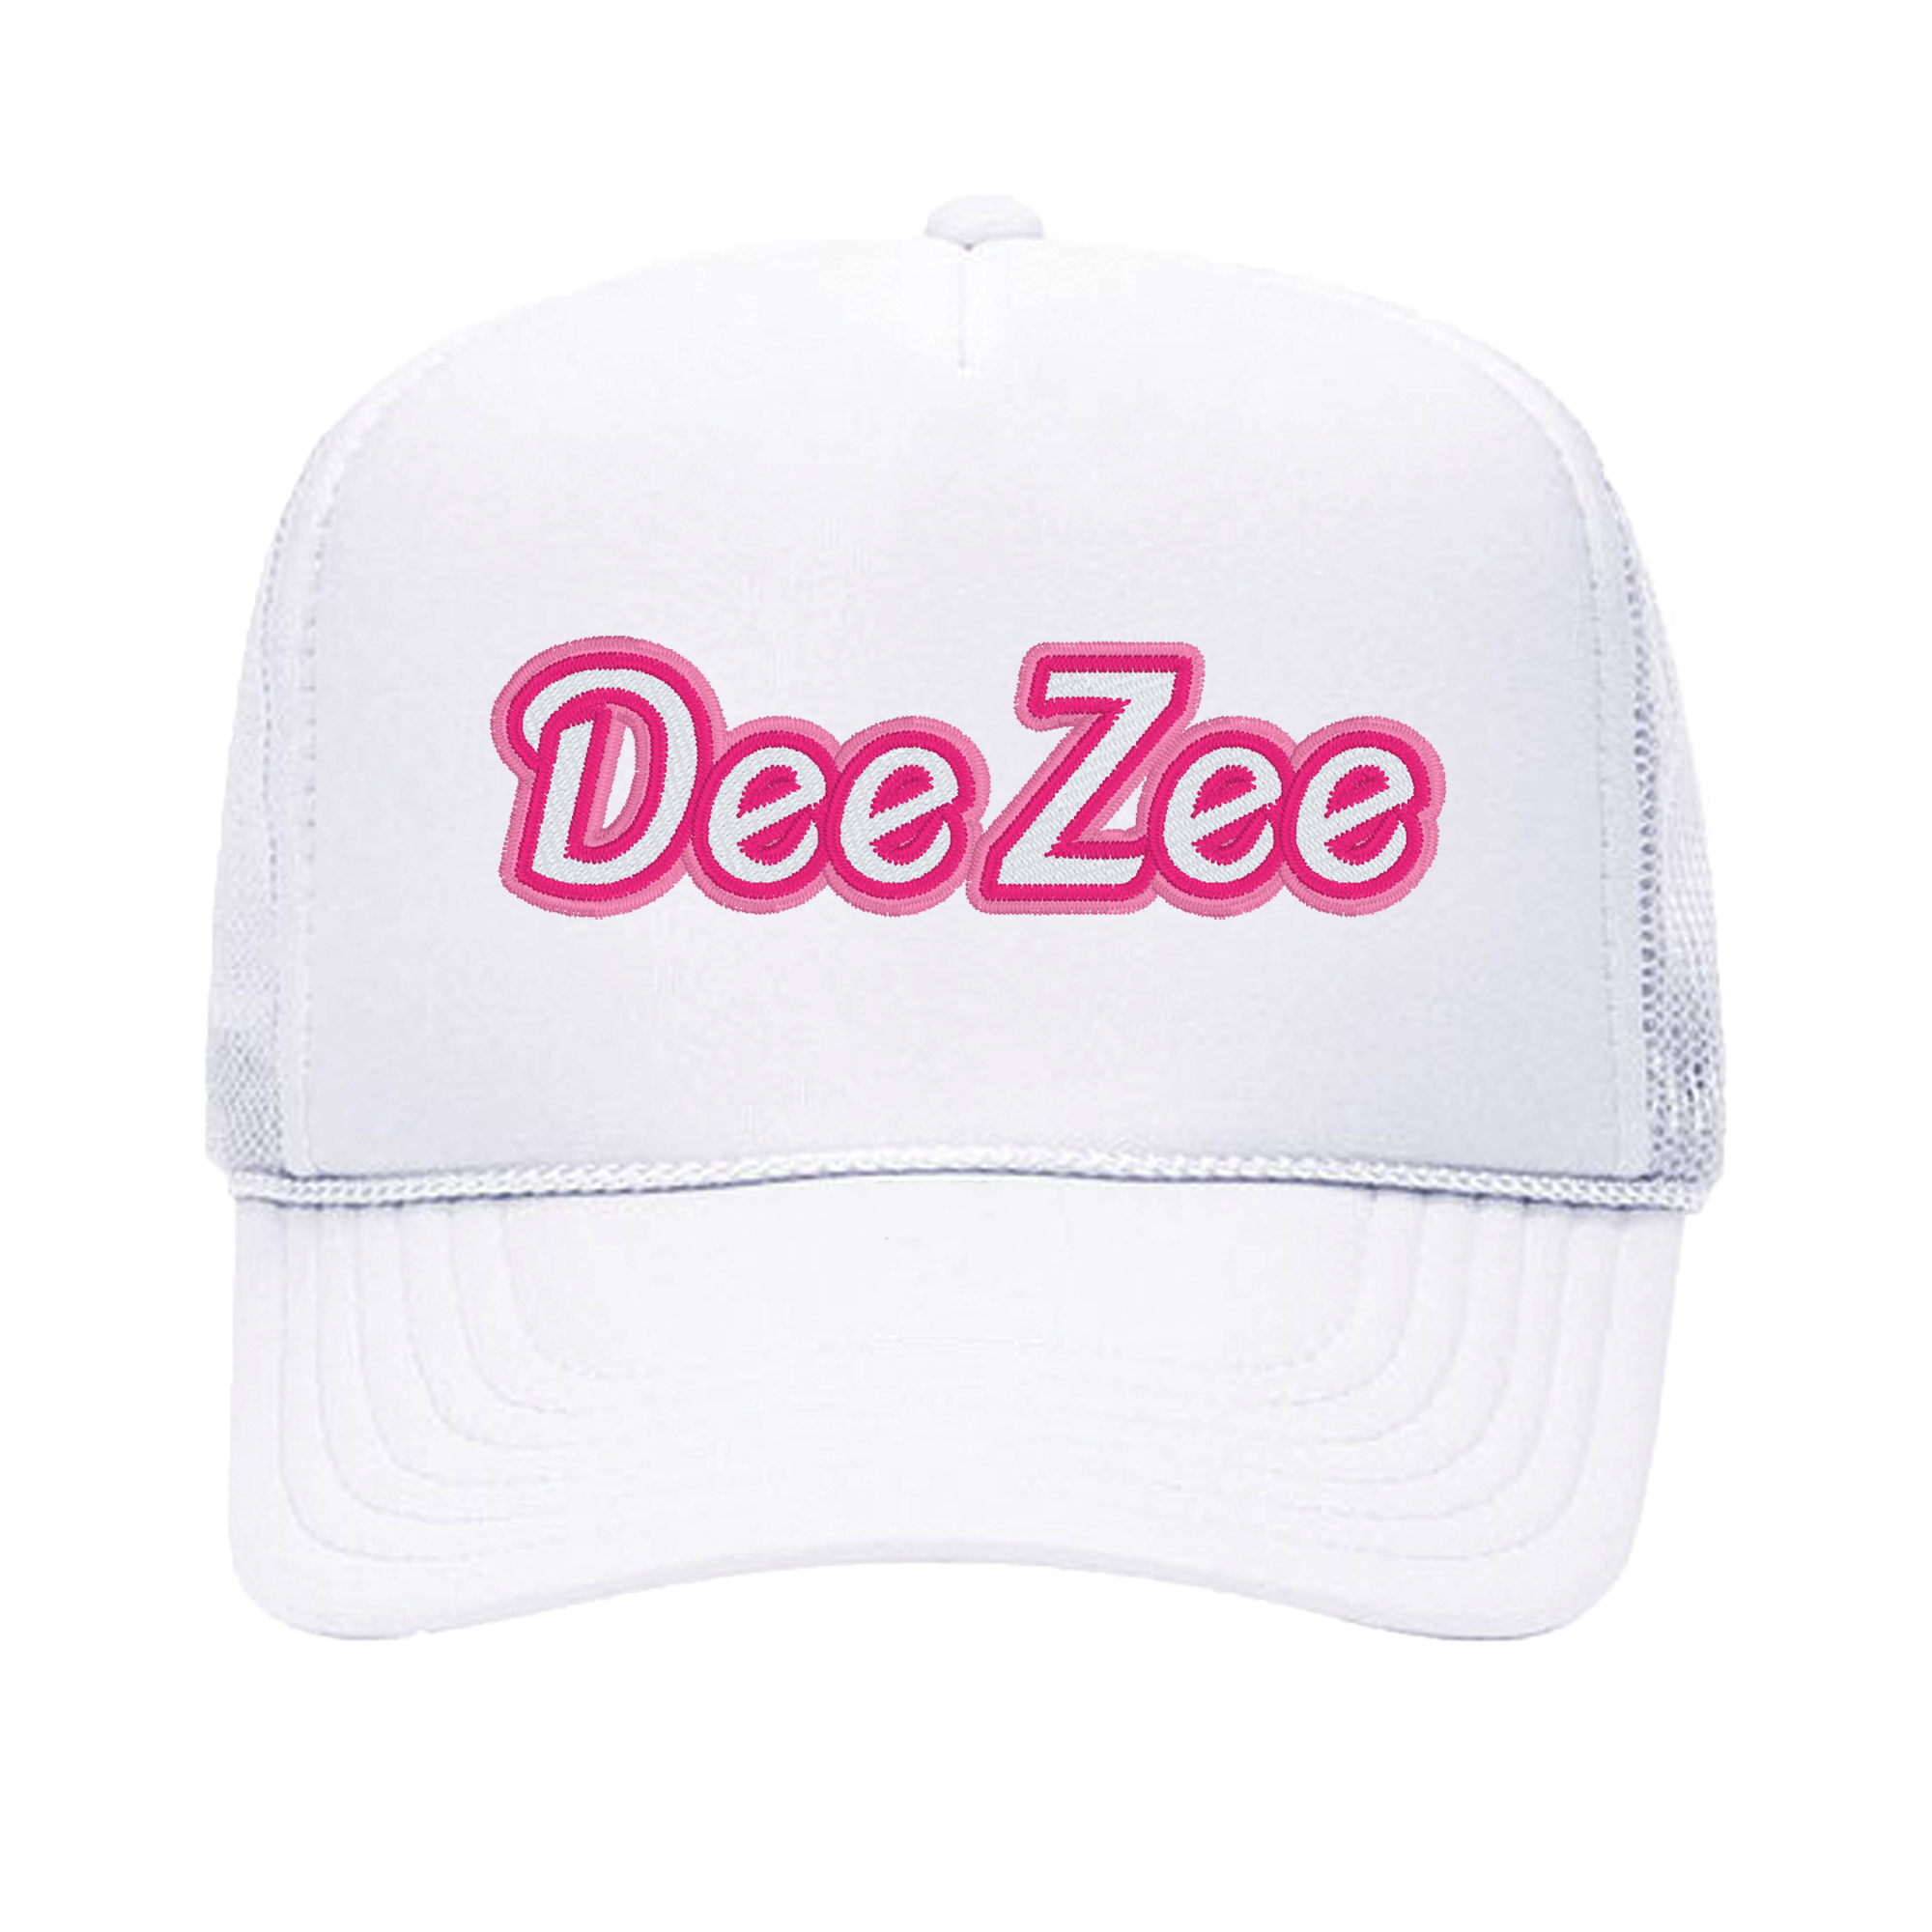 a white trucker hat with the word dee zeee on it